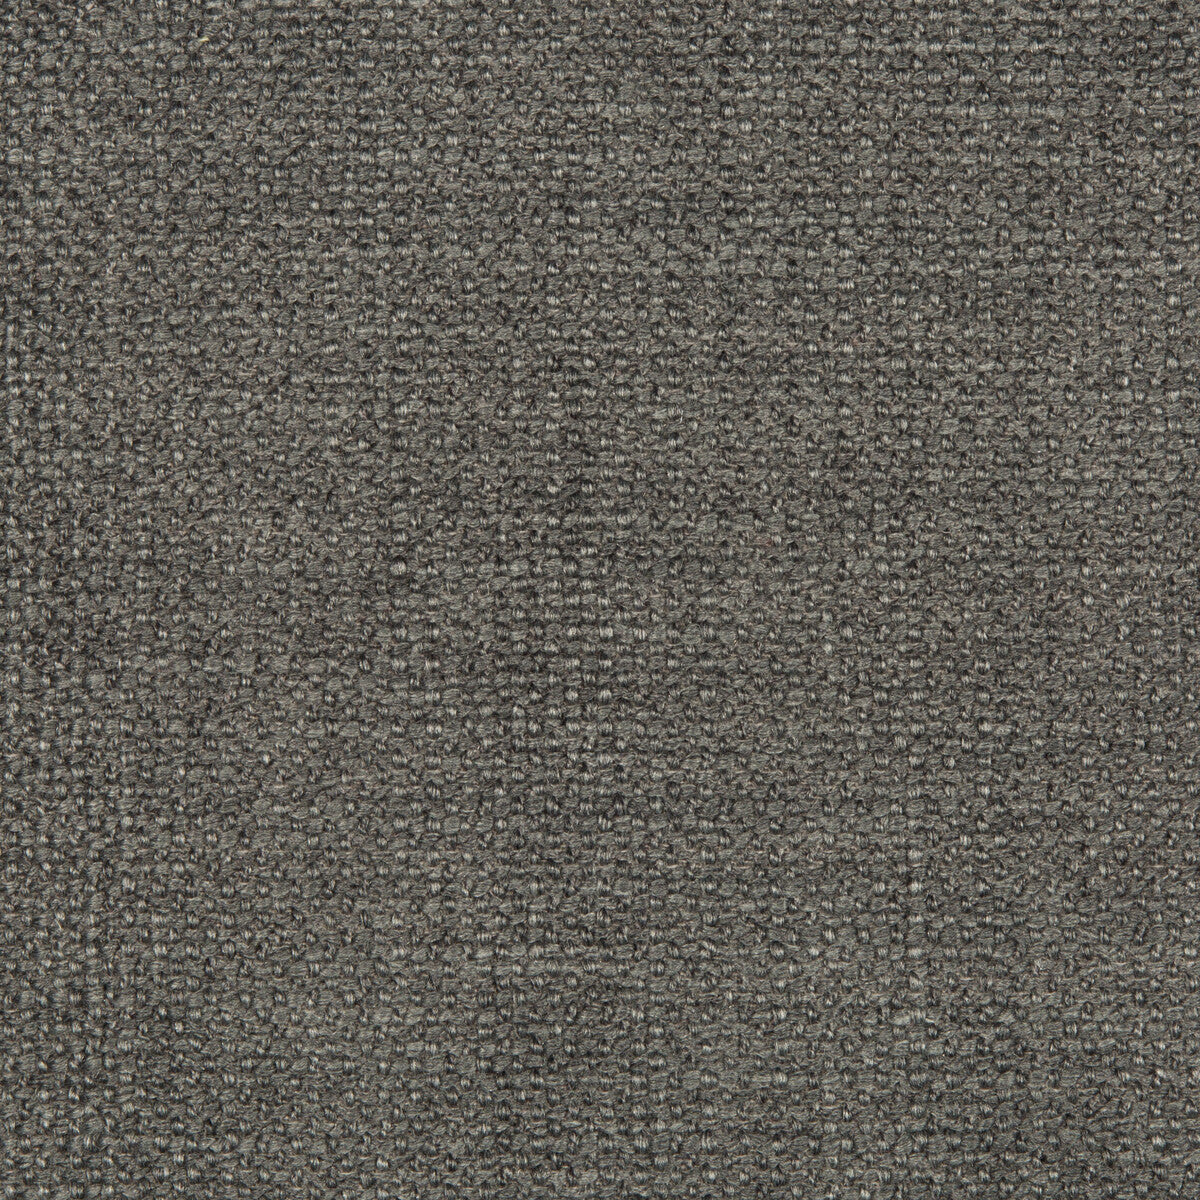 Kravet Smart fabric in 35379-21 color - pattern 35379.21.0 - by Kravet Smart in the Performance Kravetarmor collection